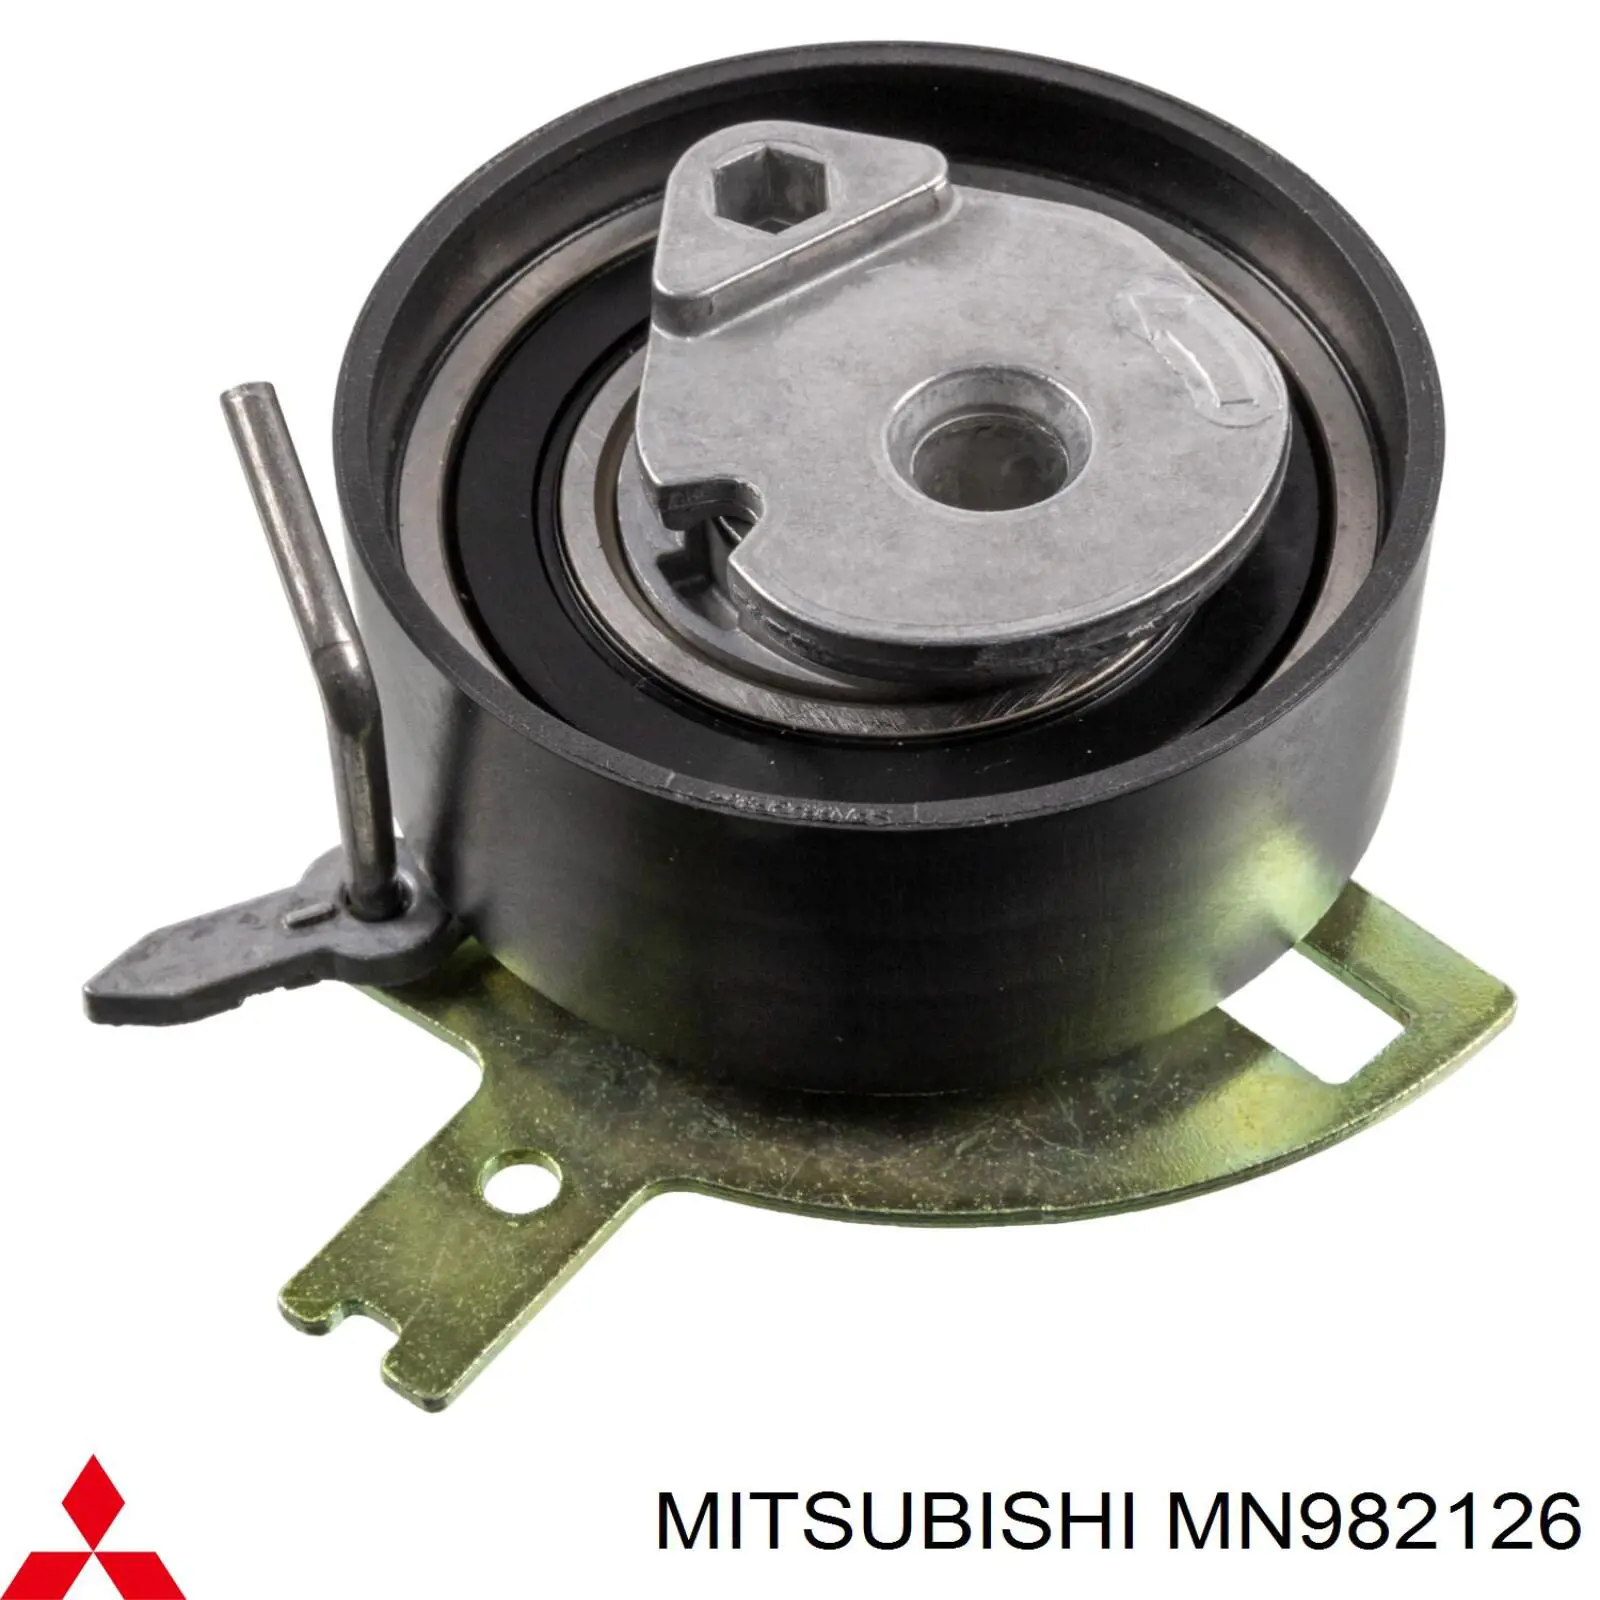 MN982126 Mitsubishi ролик грм